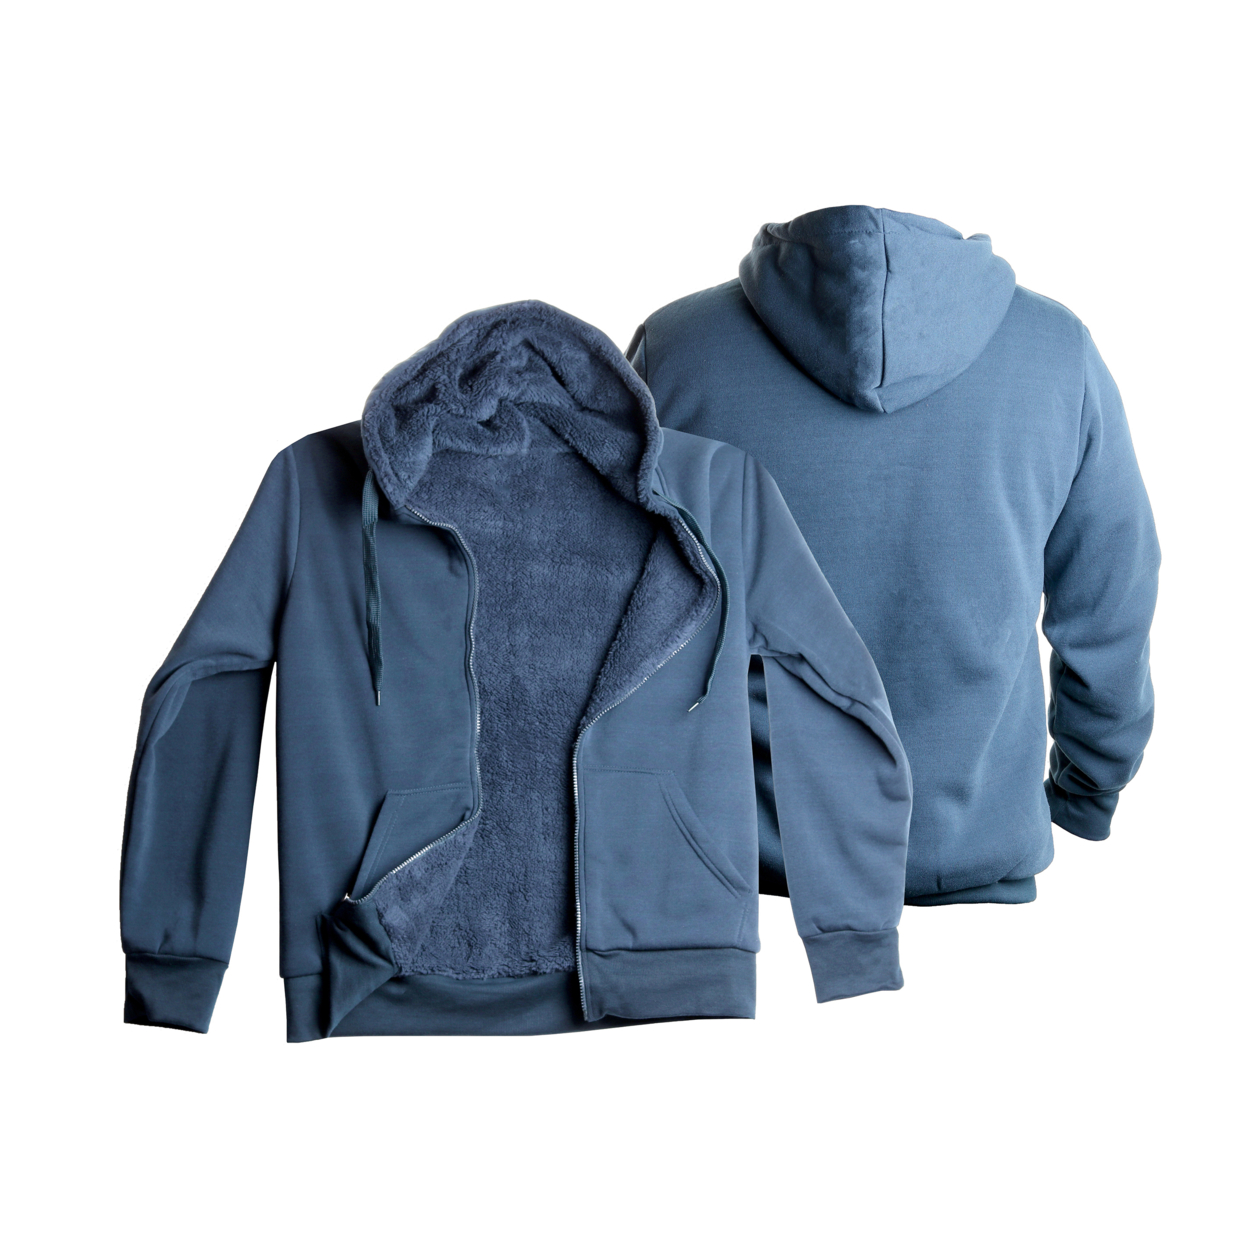 Men's Heavyweight Sherpa-Lined Fleece Hoodies - Blue, Medium